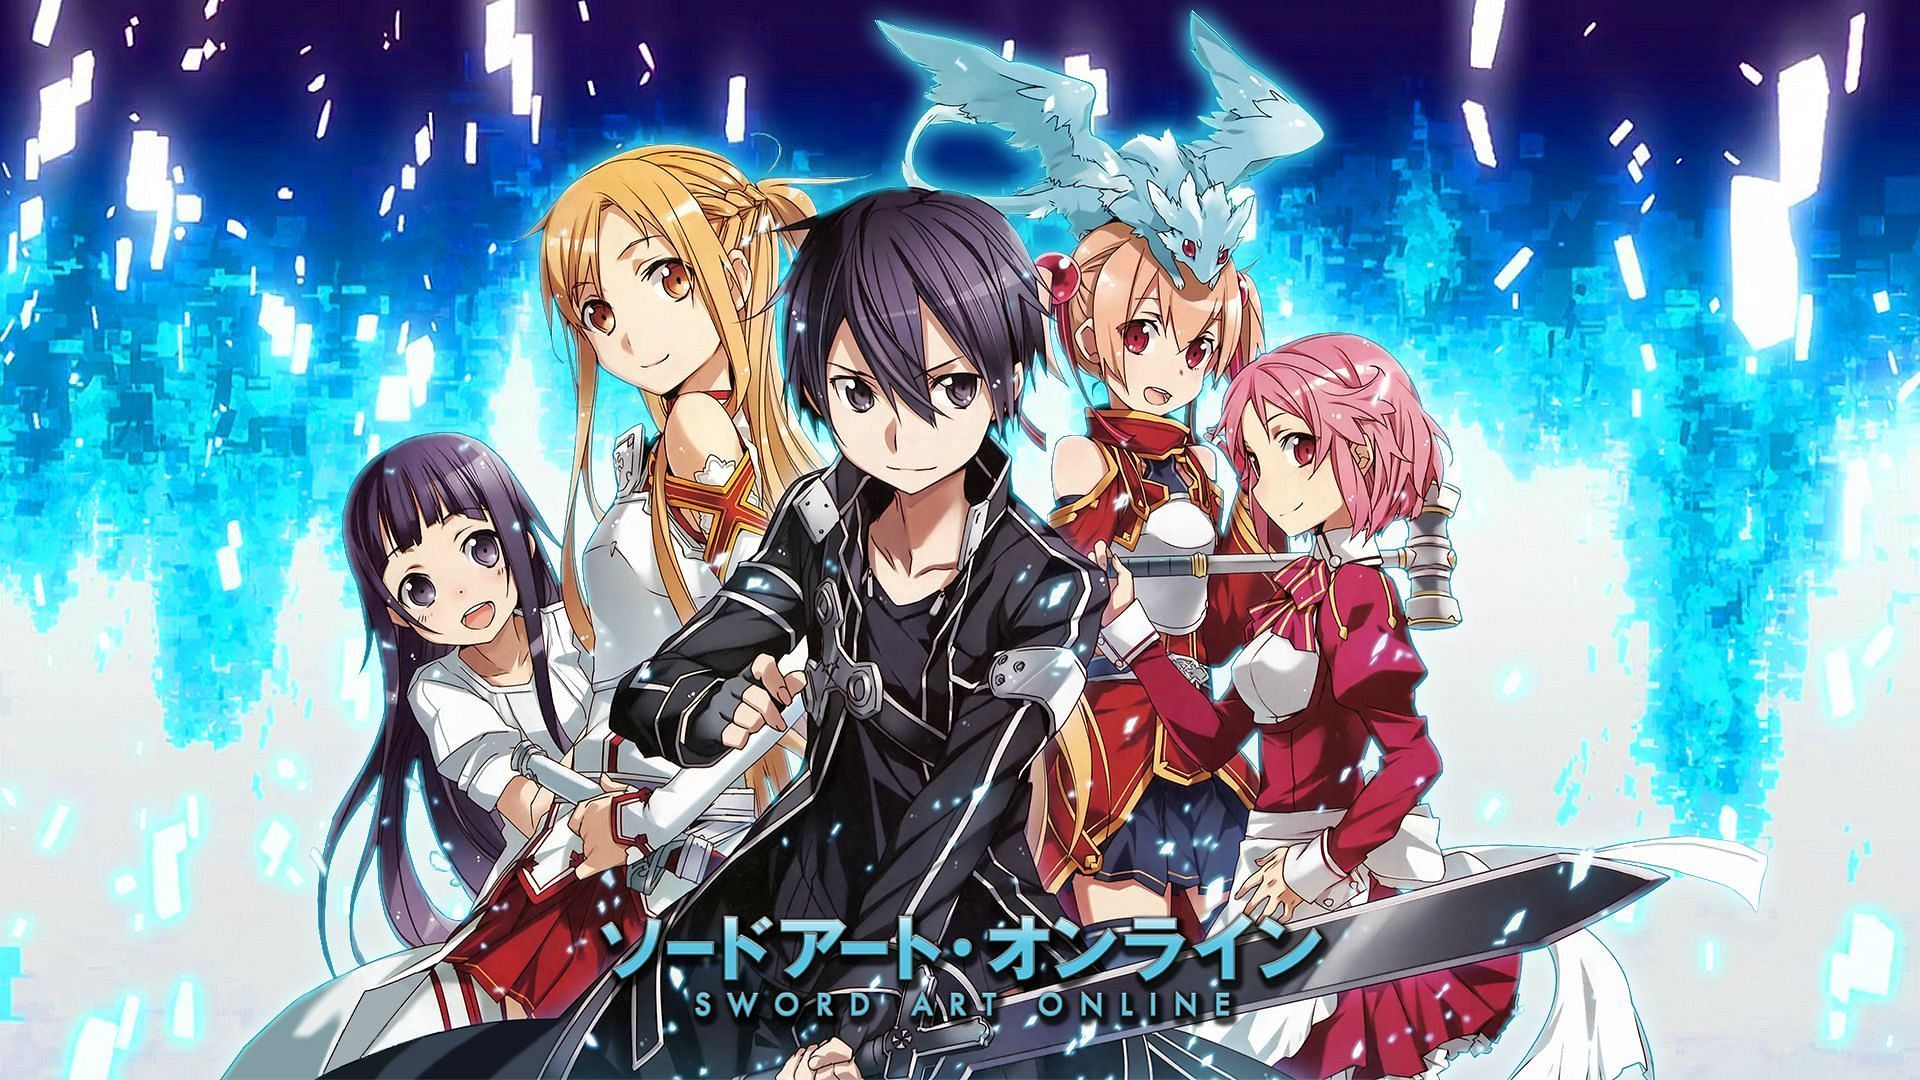 2nd Sword Art Online Progressive Anime Film Opens This Fall  News  Anime  News Network